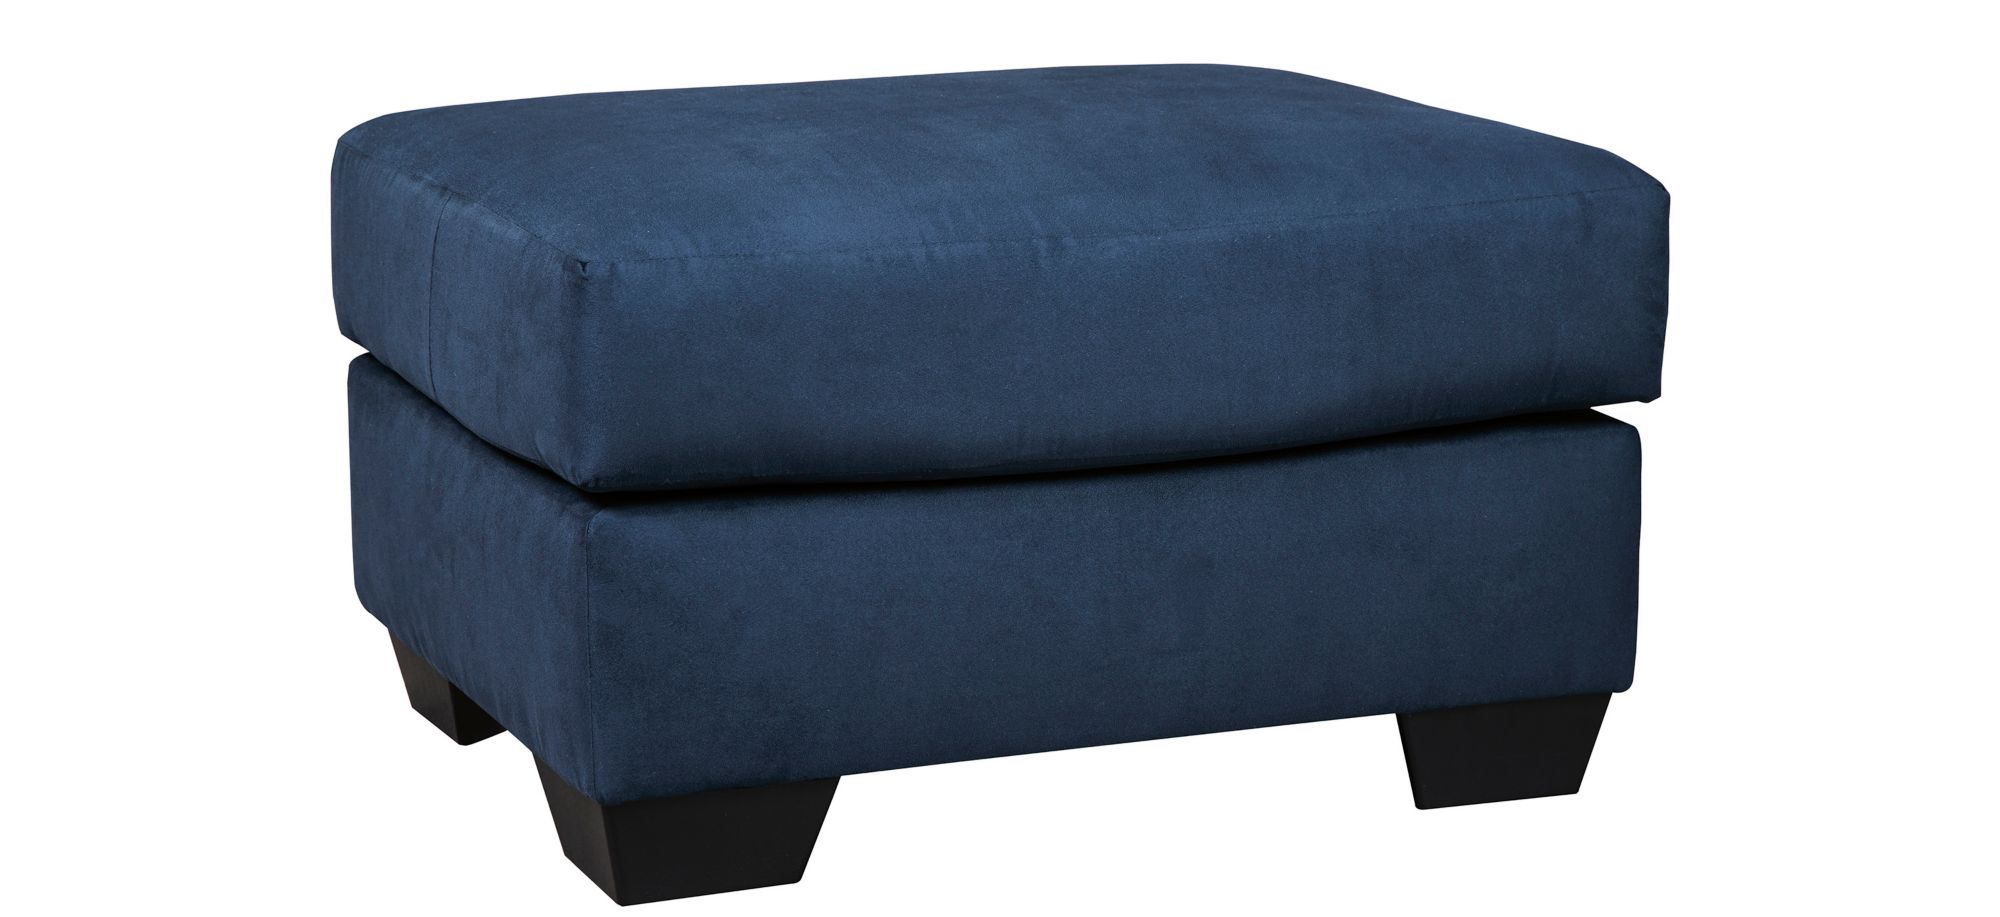 Whitman Ottoman in Blue by Ashley Furniture